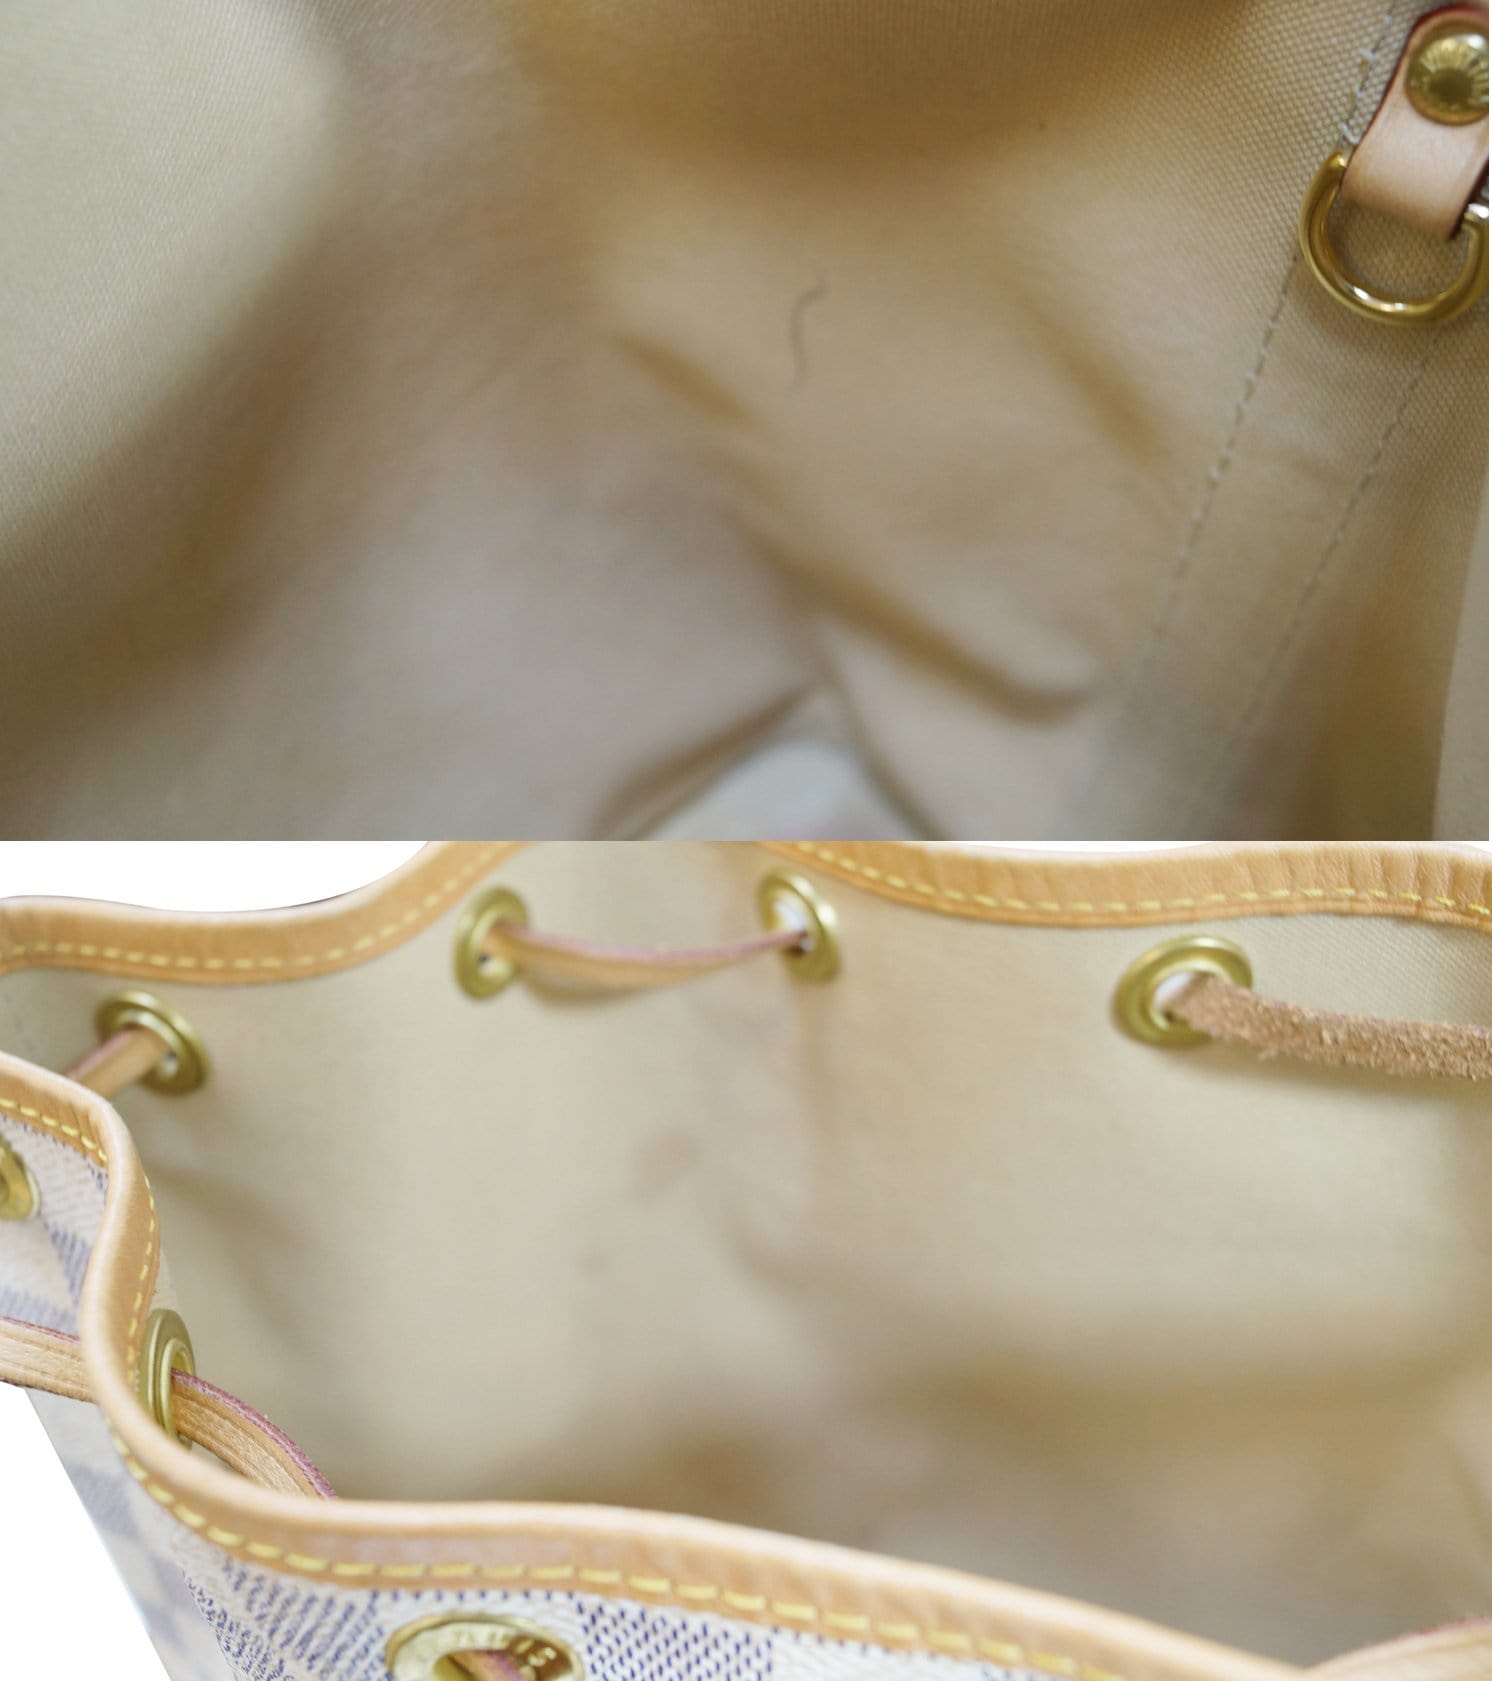 Louis Vuitton 2015 Pre-owned Noe Bb Bucket Bag - White